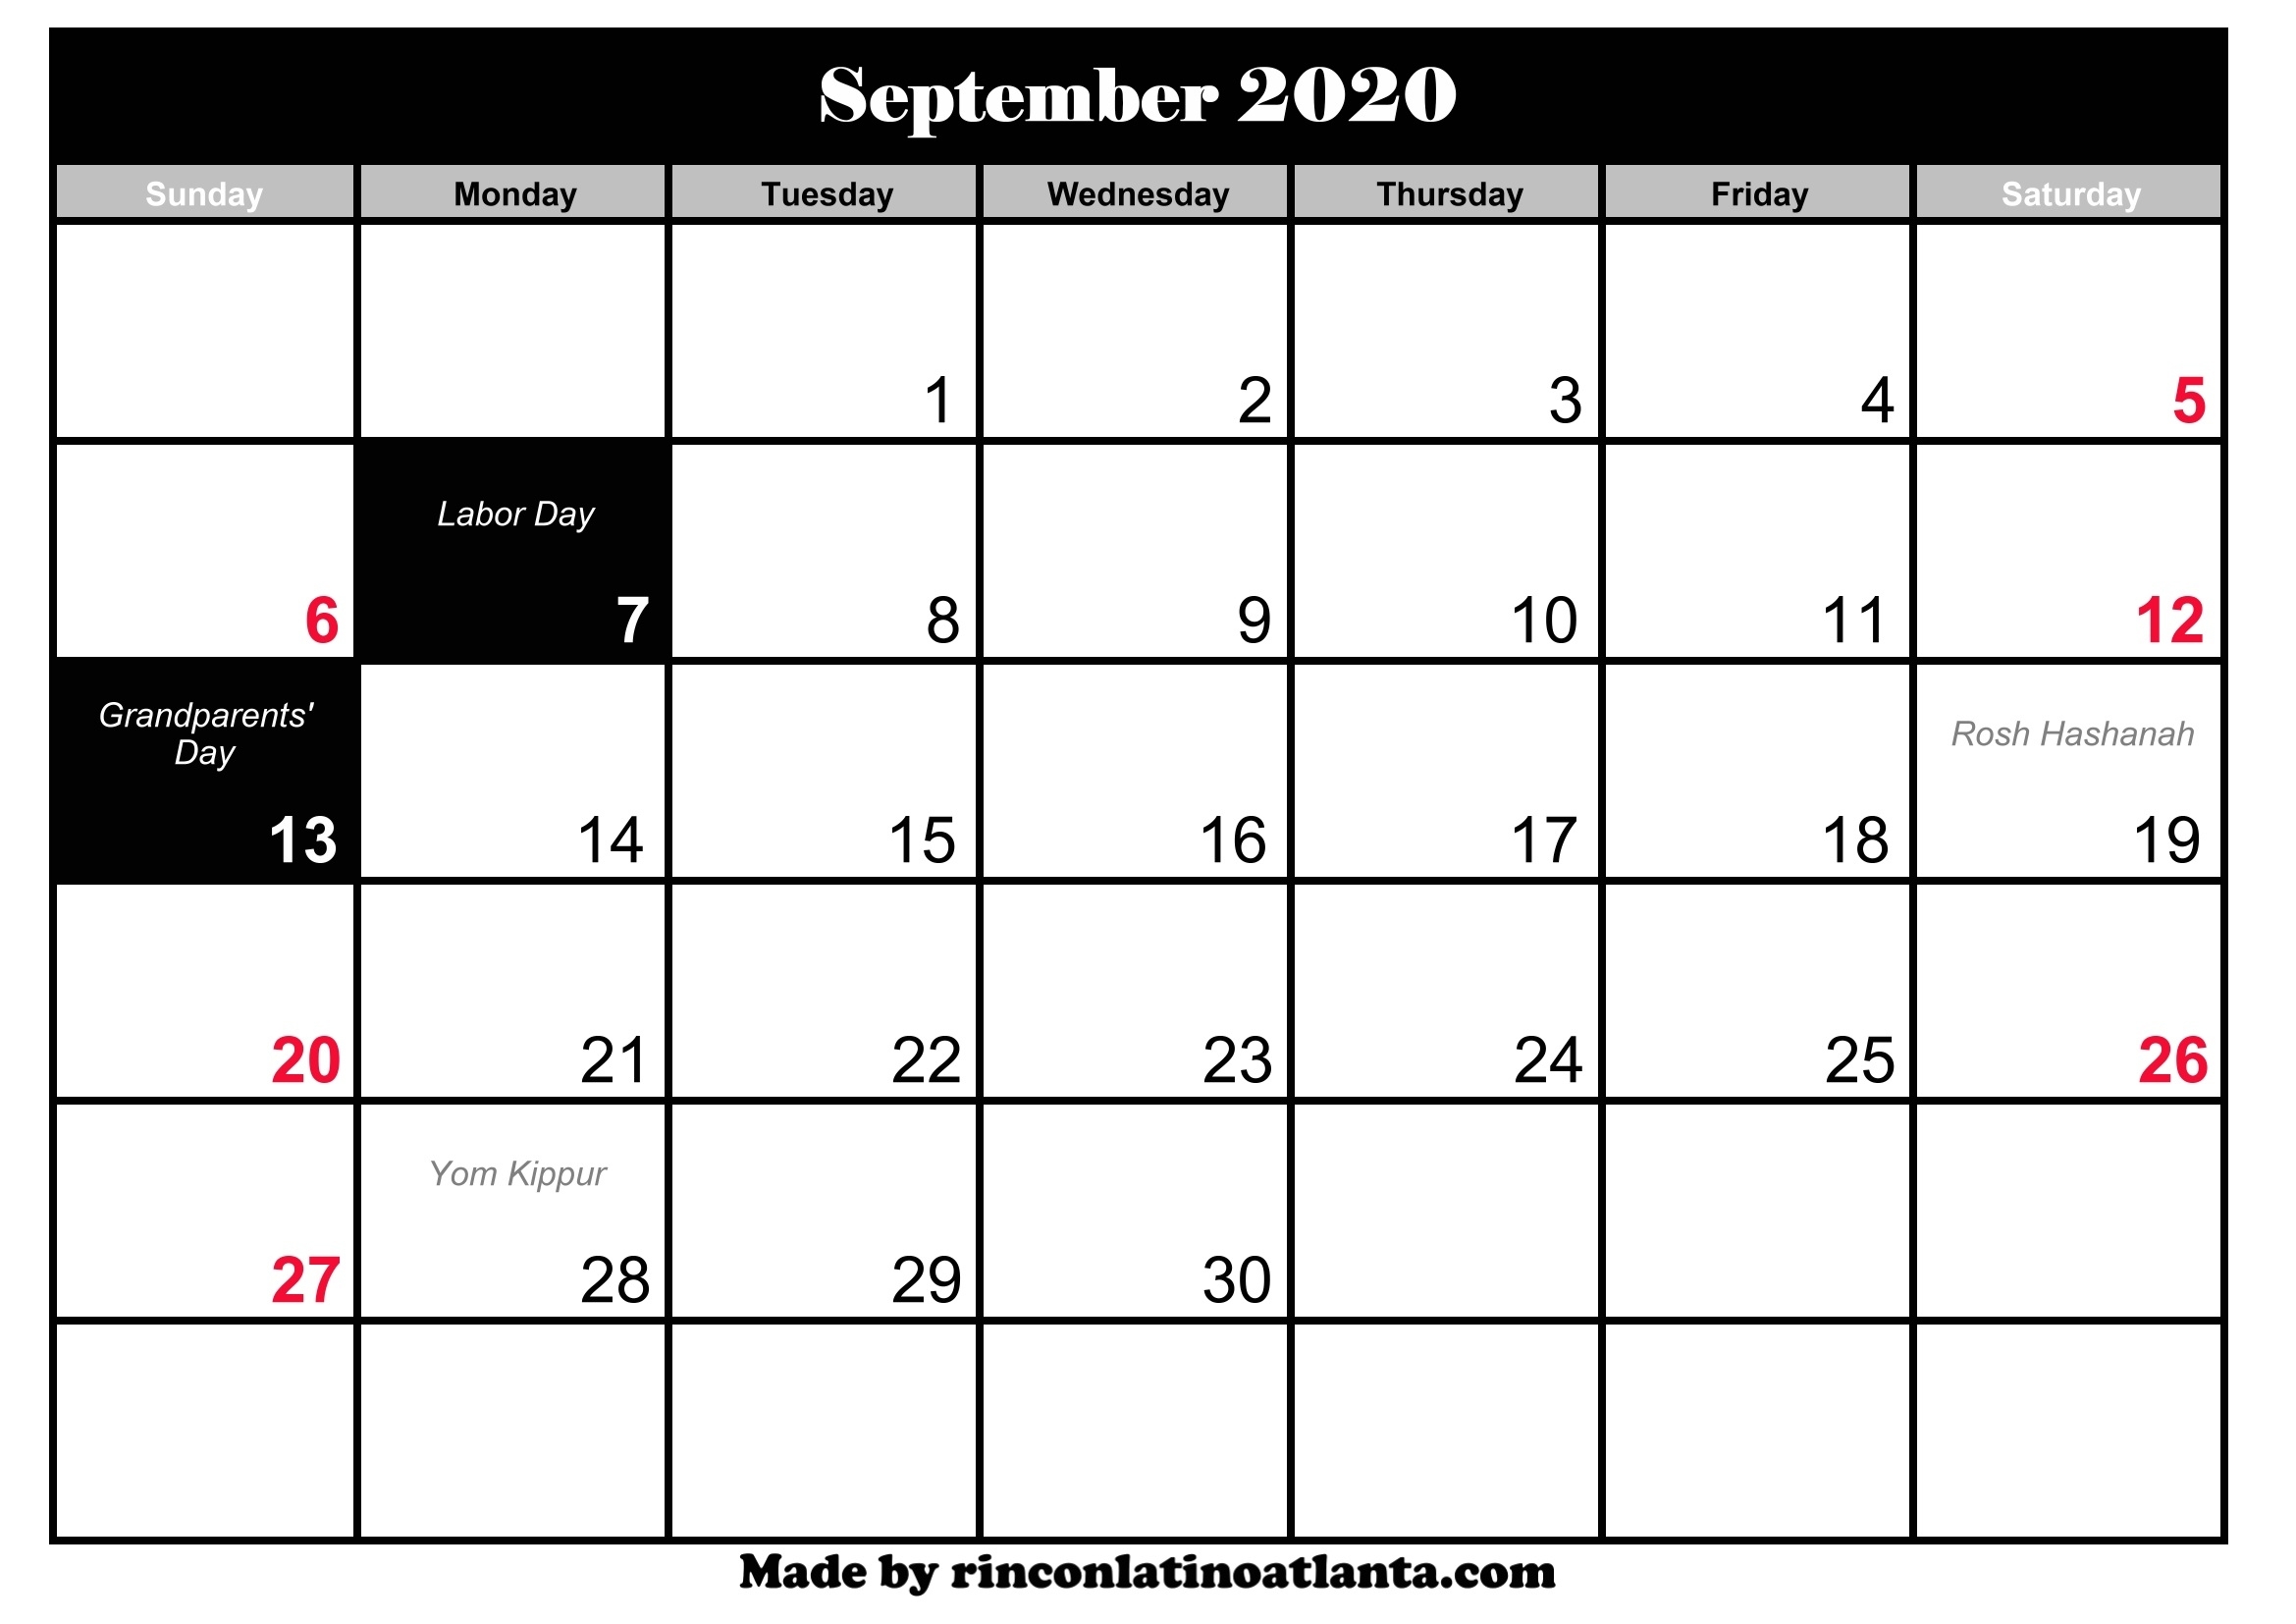 Top 2020 Calendar With Holidays - Katsuri Impressive Calendar From September 2020 To December With Jewish Holidays